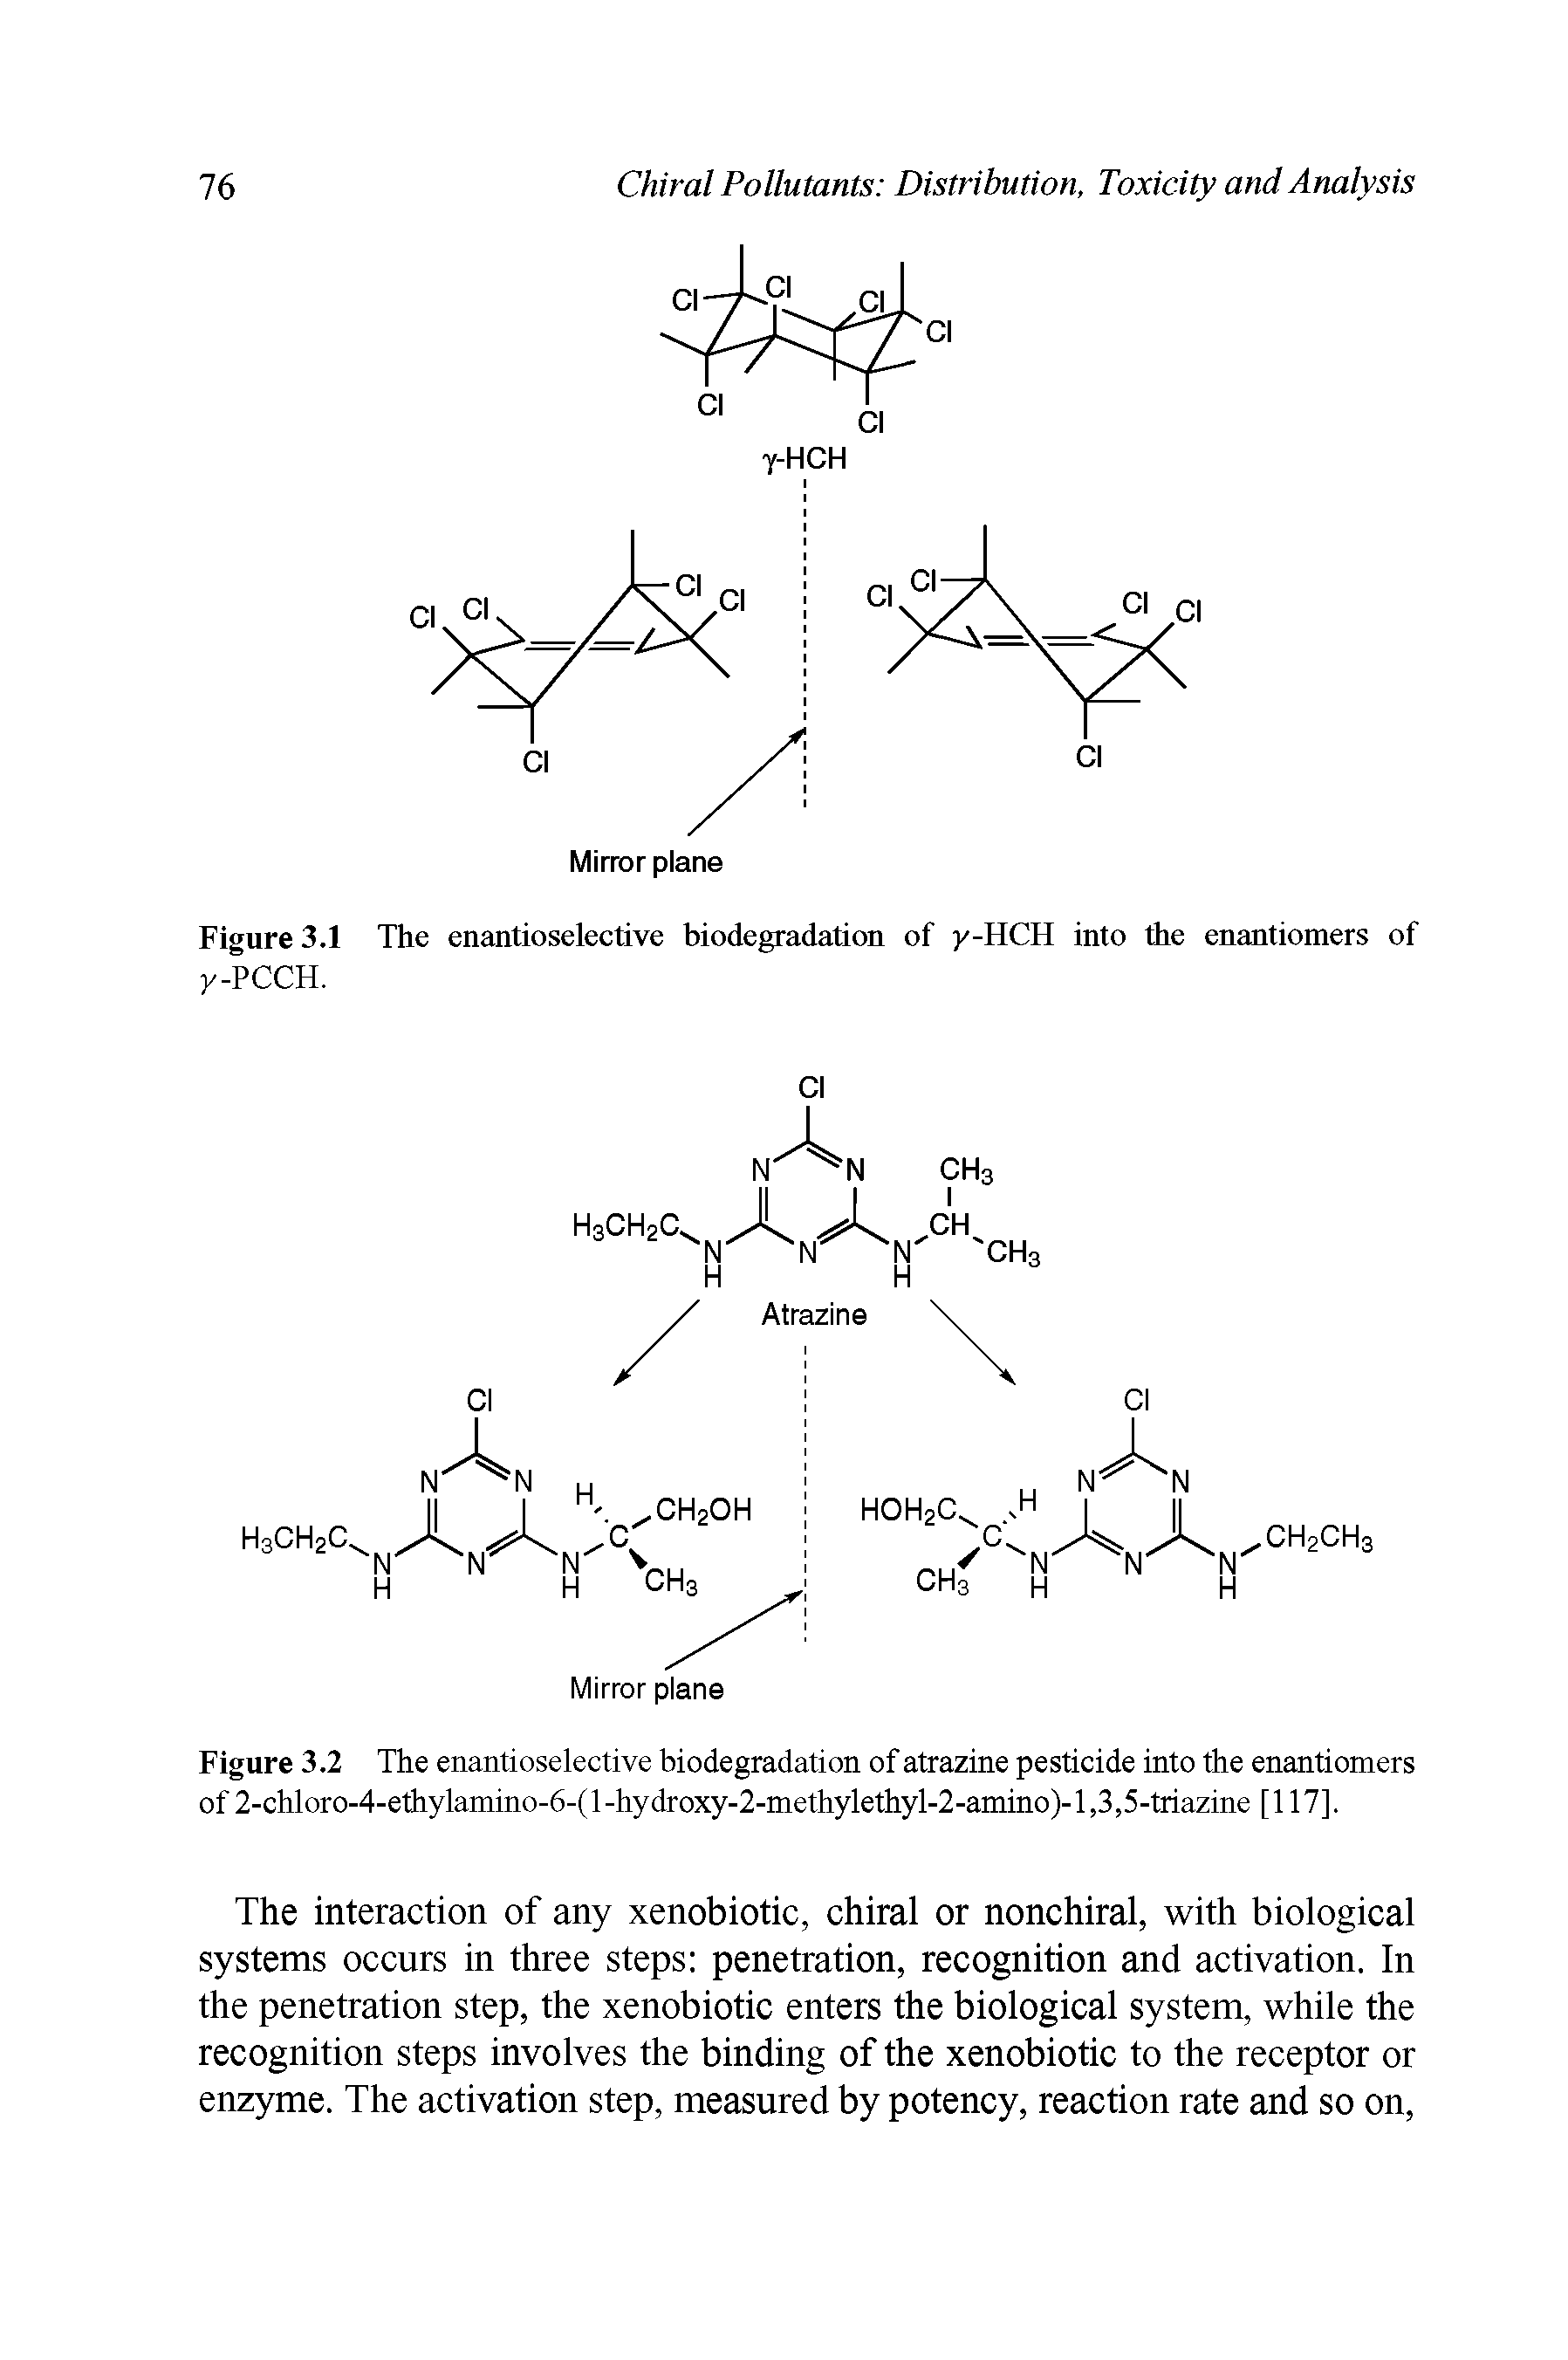 Figure 3.2 The enantioselective biodegradation of atrazine pesticide into the enantiomers of 2-chloro-4-ethylamino-6-(l-hydroxy-2-methylethyl-2-amino)-l,3,5-triazine [117].